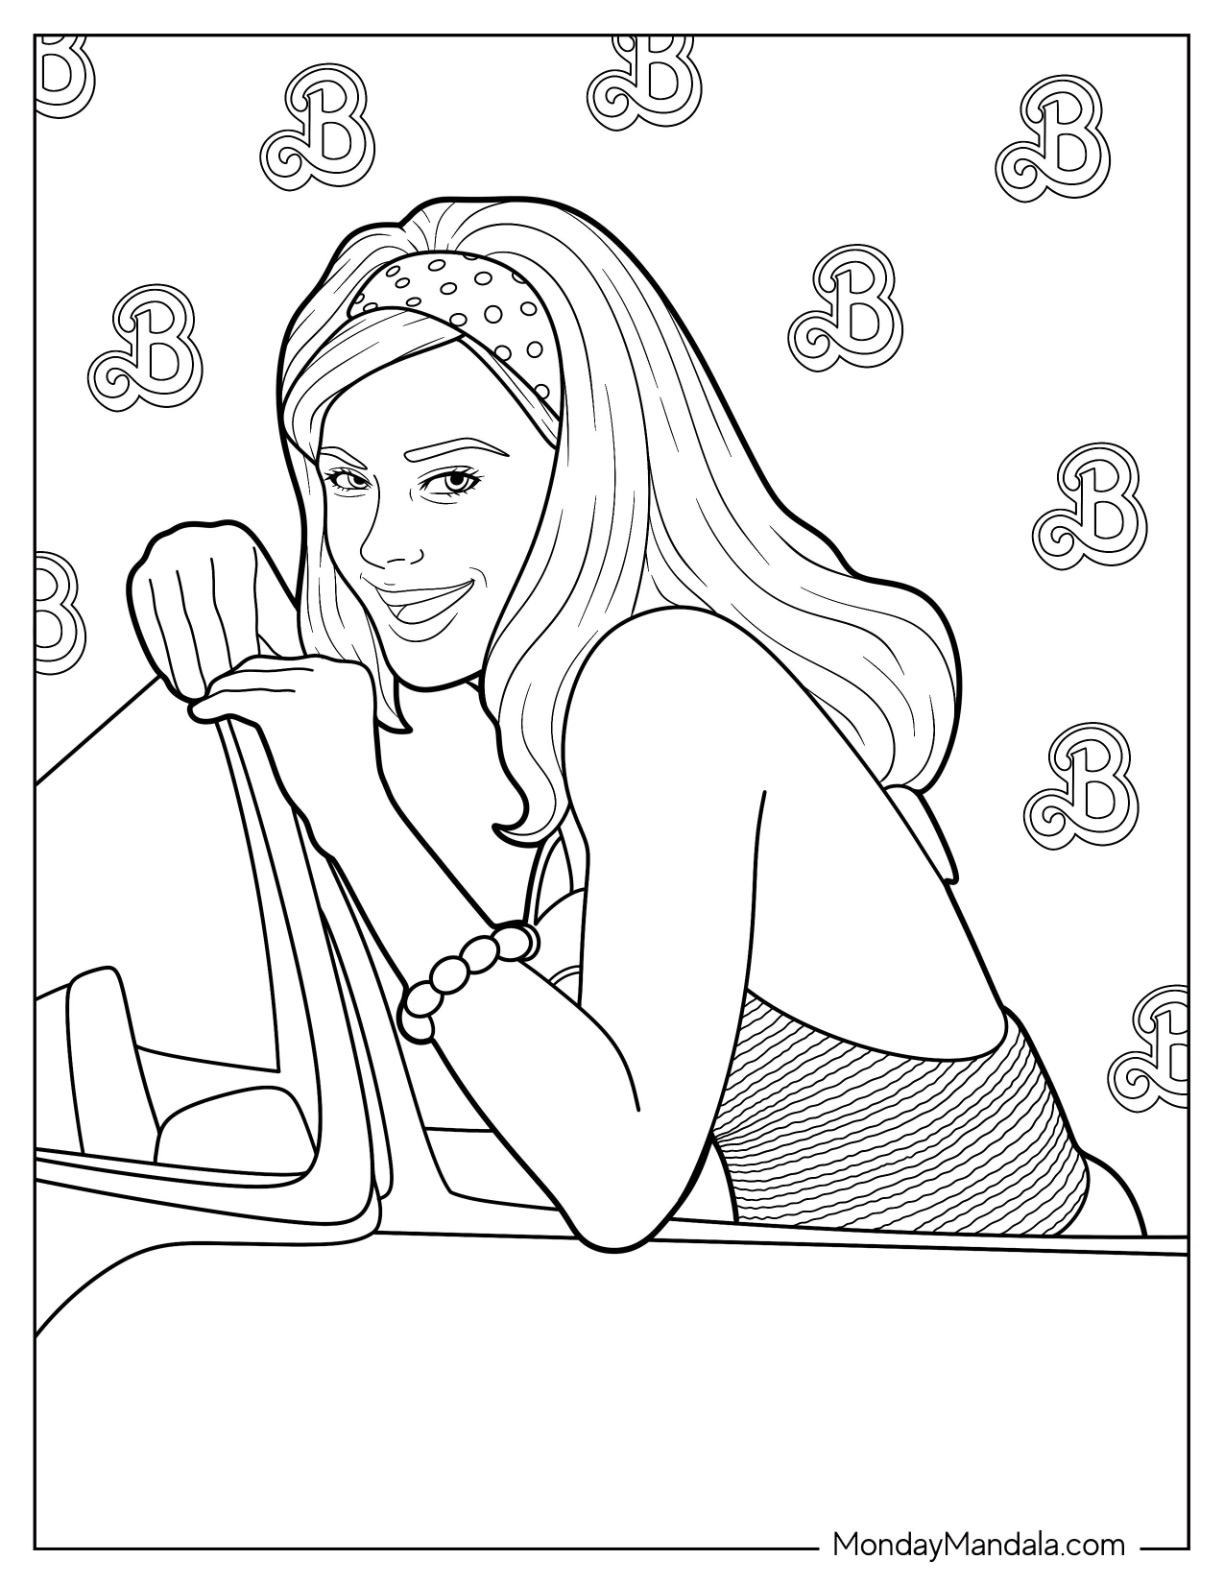 Barbie coloring pages free pdf printables